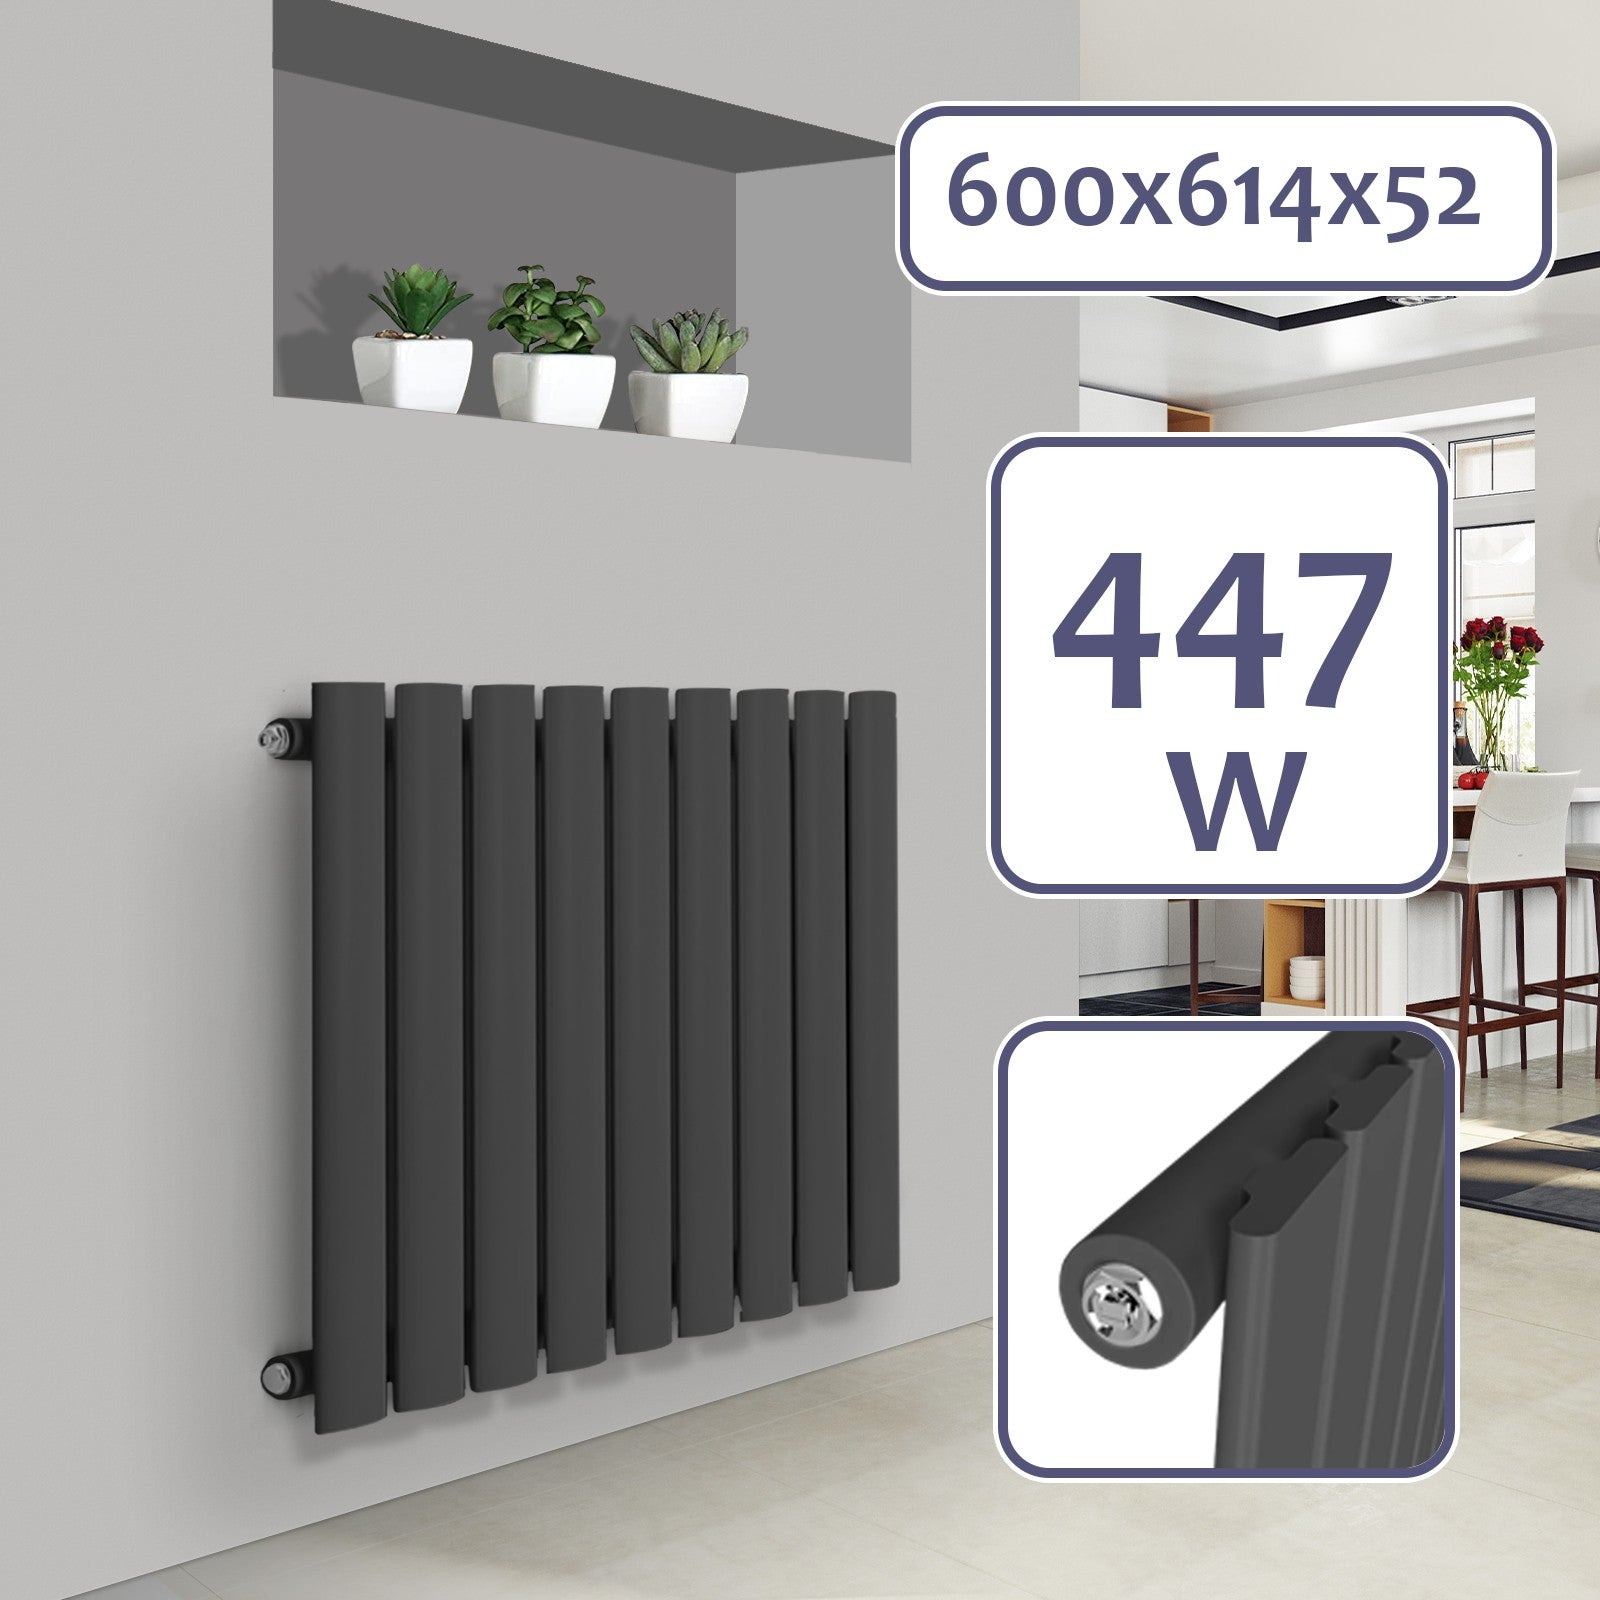 AquamarineÂ® radiator - vandret, 600 x 614 mm, 447W, stål, antracit